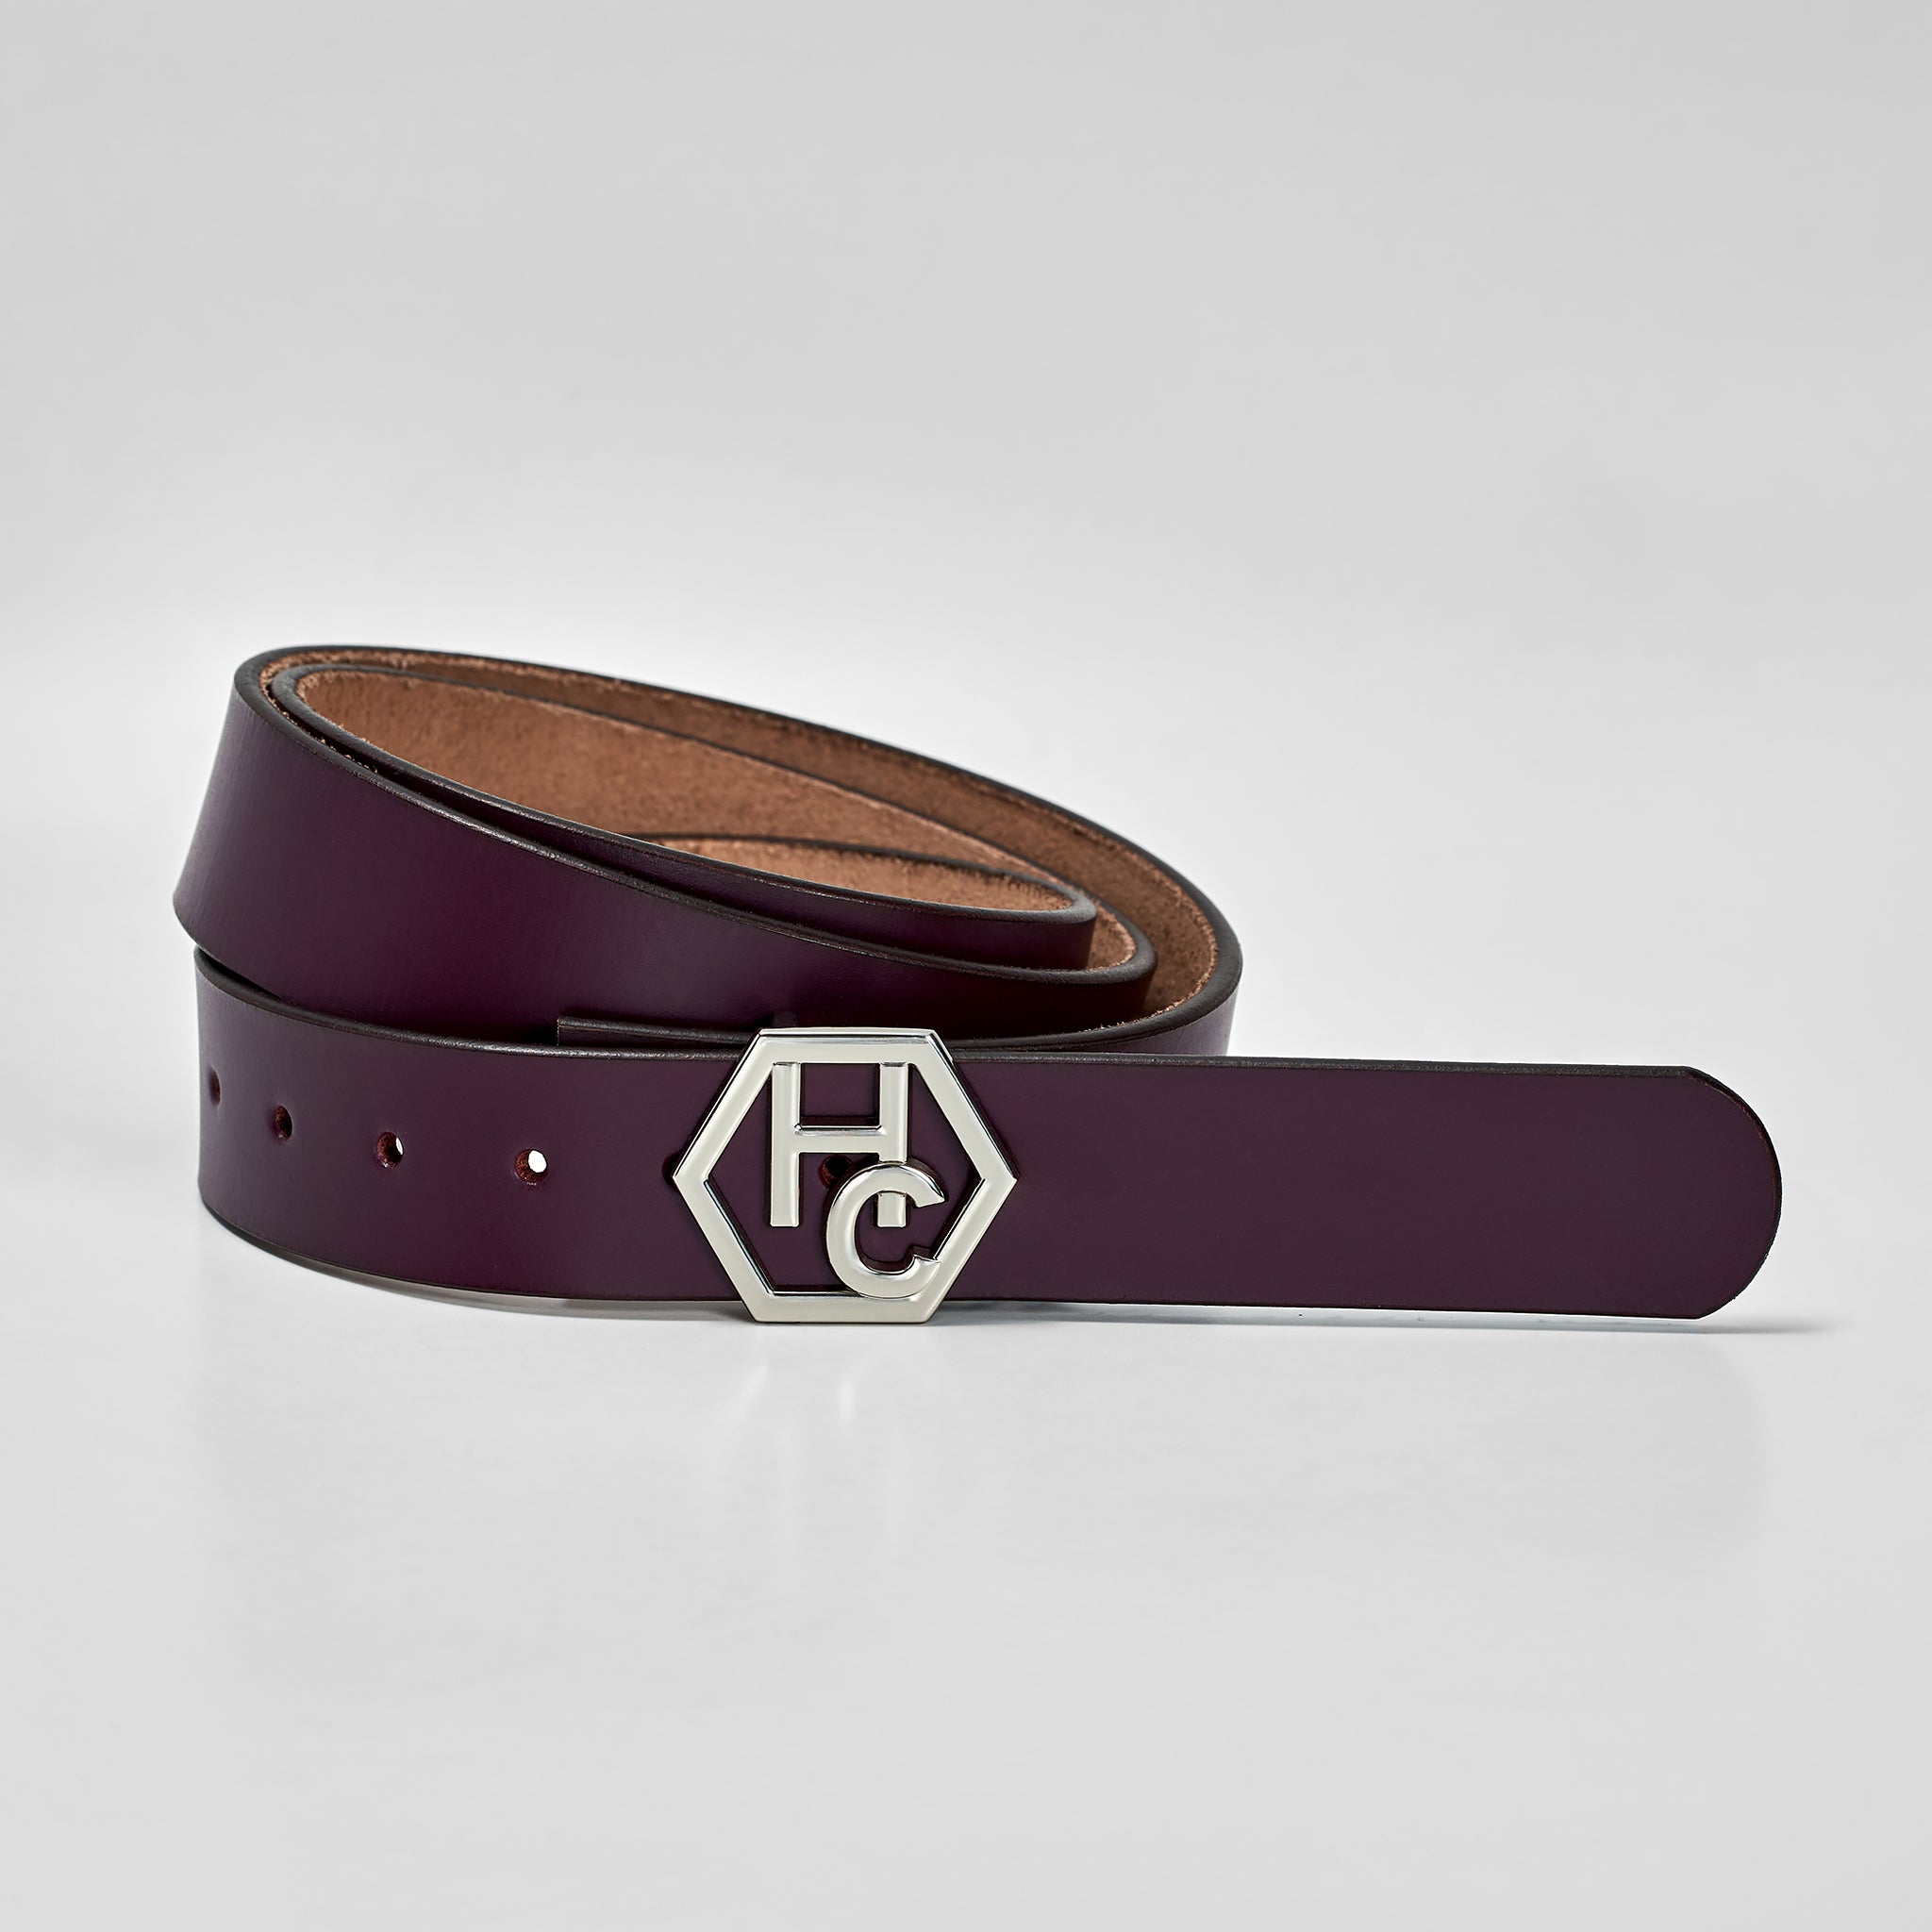 Hedonist Chicago Seamless Dark Purple Leather Belt 1" 32381388390551